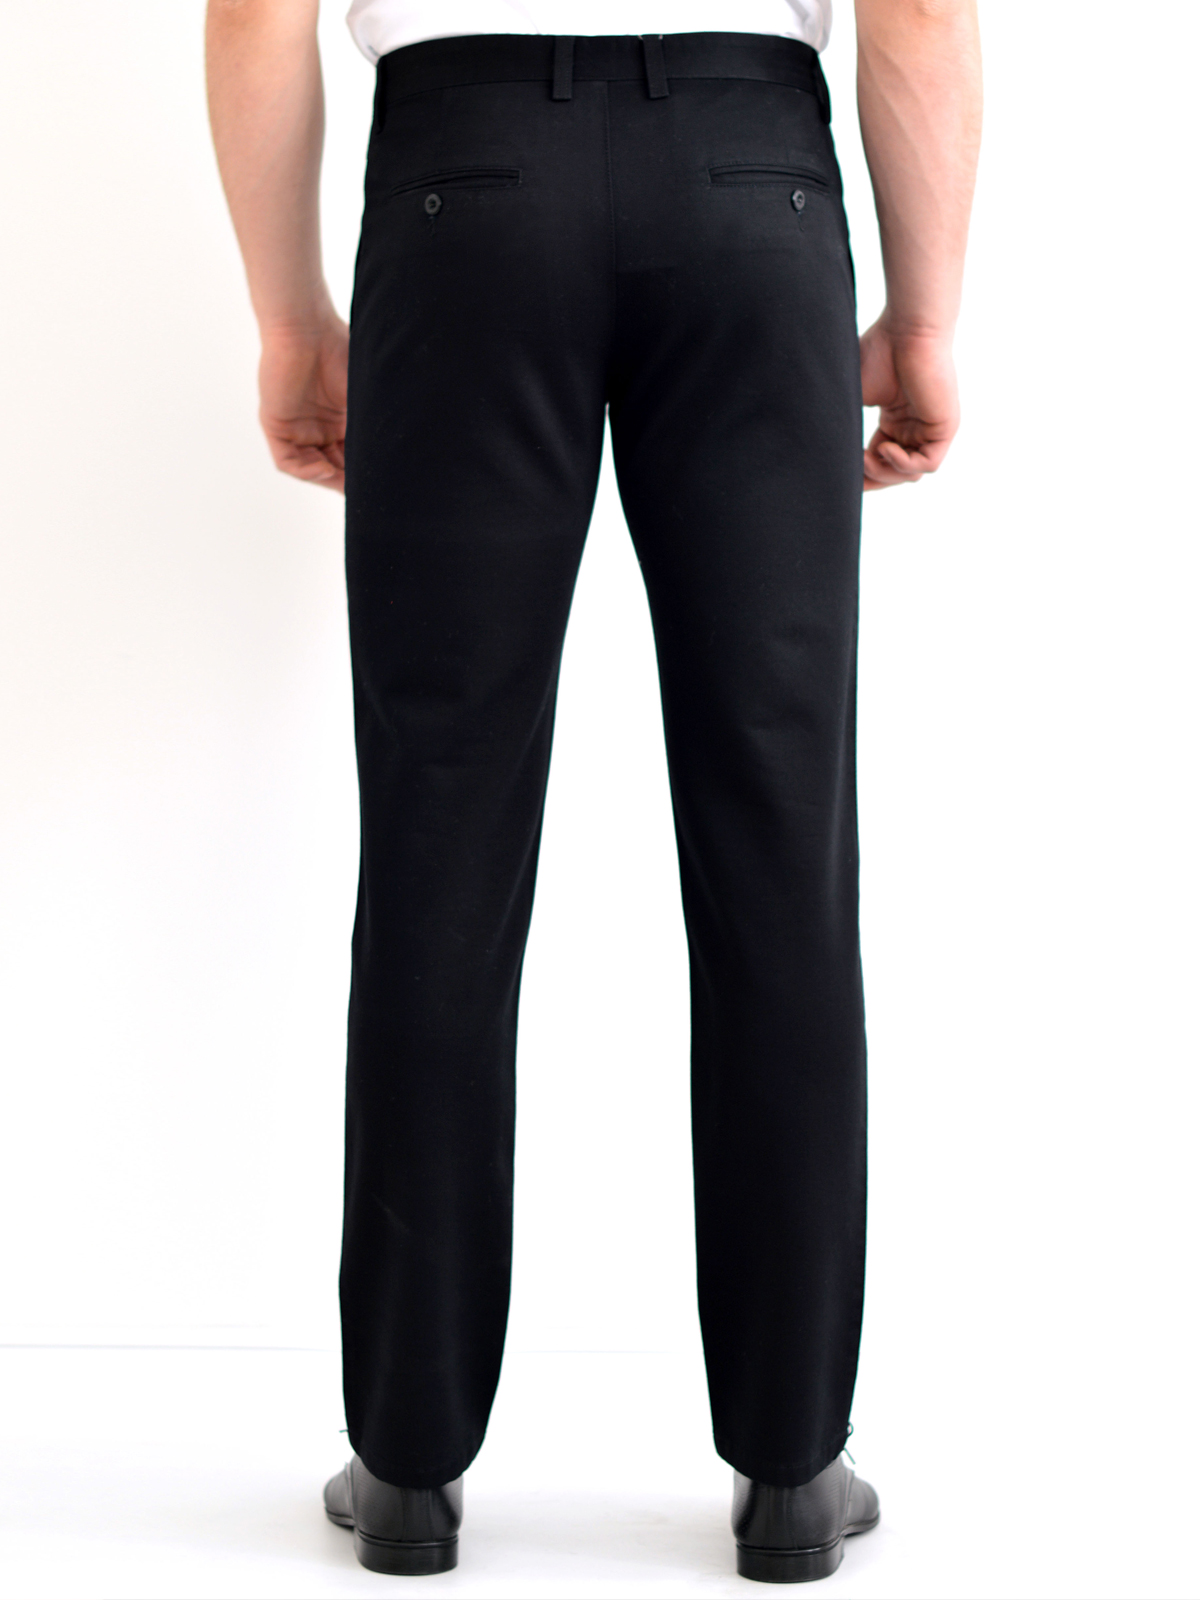 Pantaloni negri din bumbac si elastan - 60172 € 11.25 img2